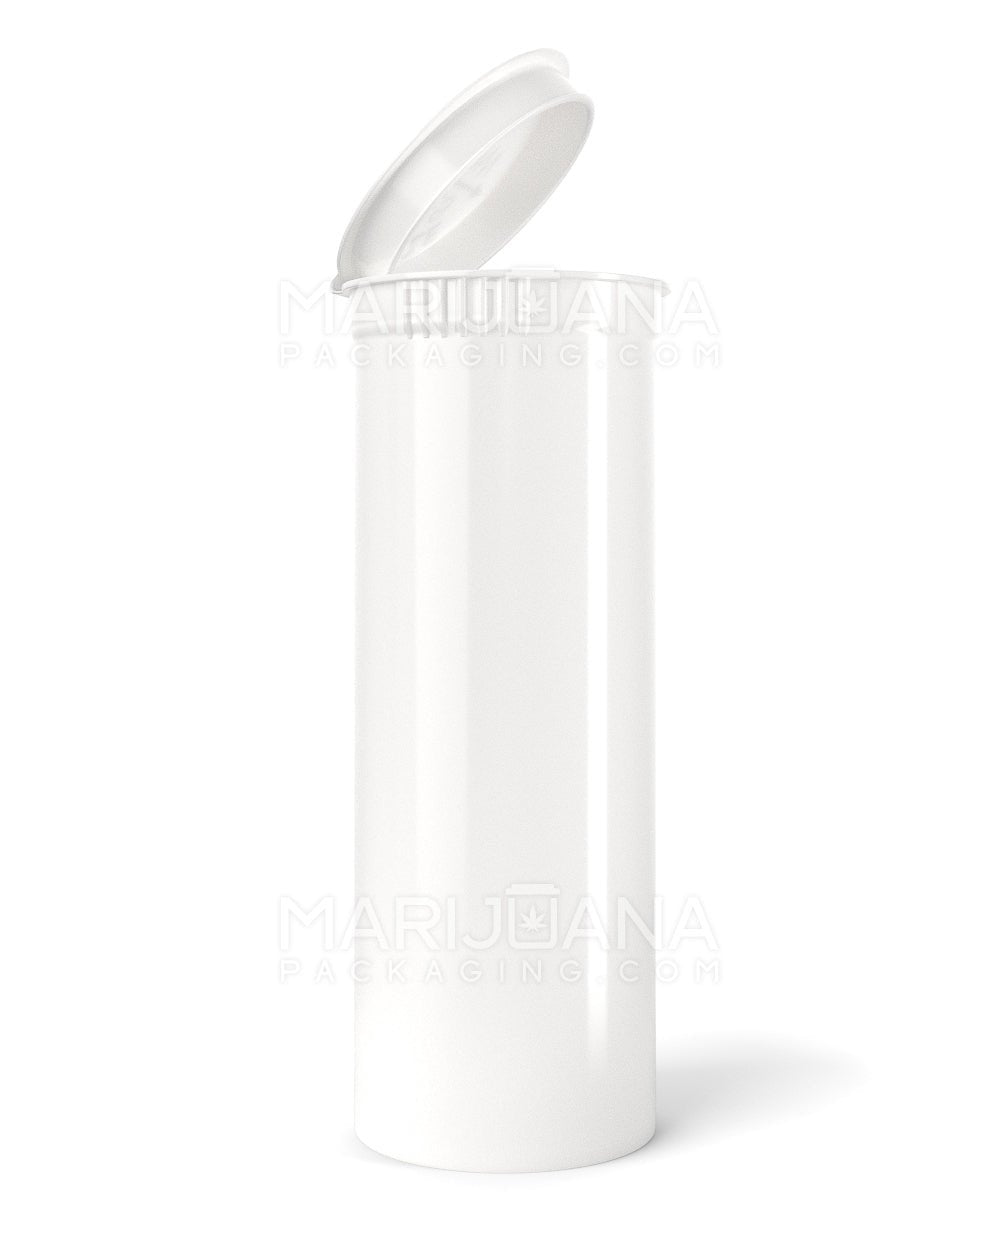 POLLEN GEAR | Child Resistant Kush Opaque White Pop Top Bottles | 60dr - 14g - 128 Count - 1